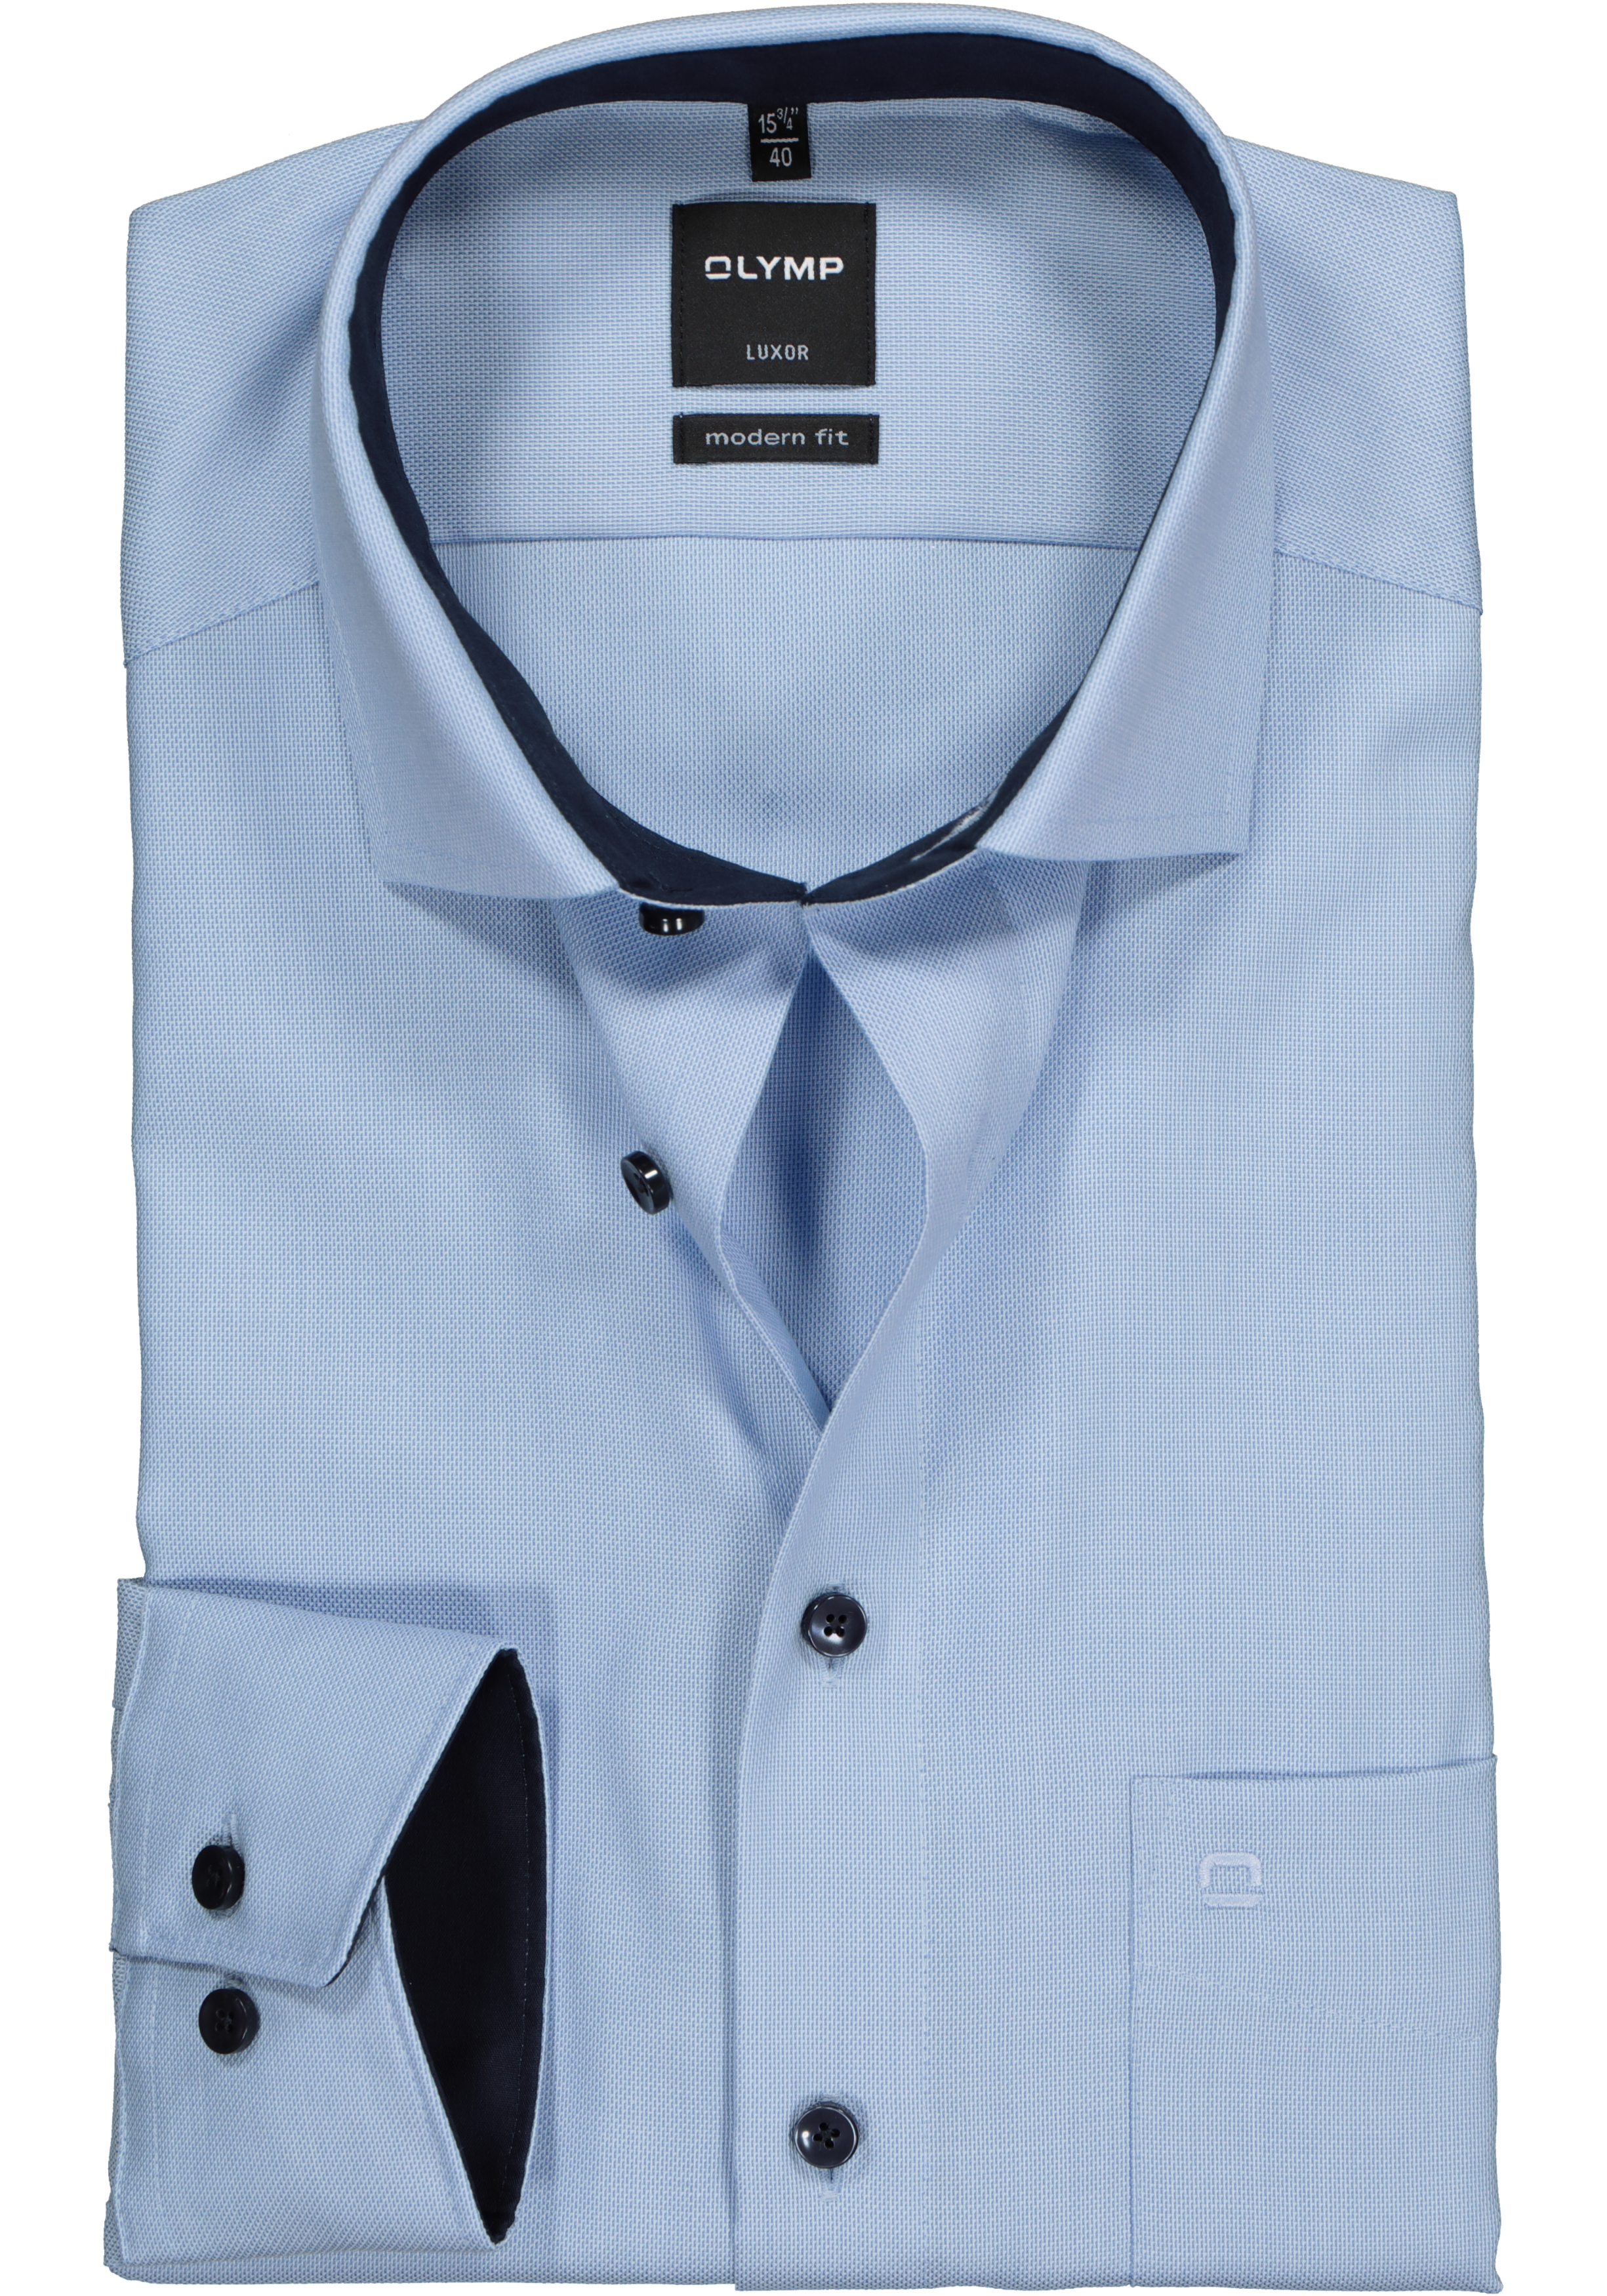 team Word gek Allemaal OLYMP Luxor modern fit overhemd, lichtblauw structuur (contrast) - Zomer  SALE tot 50% korting